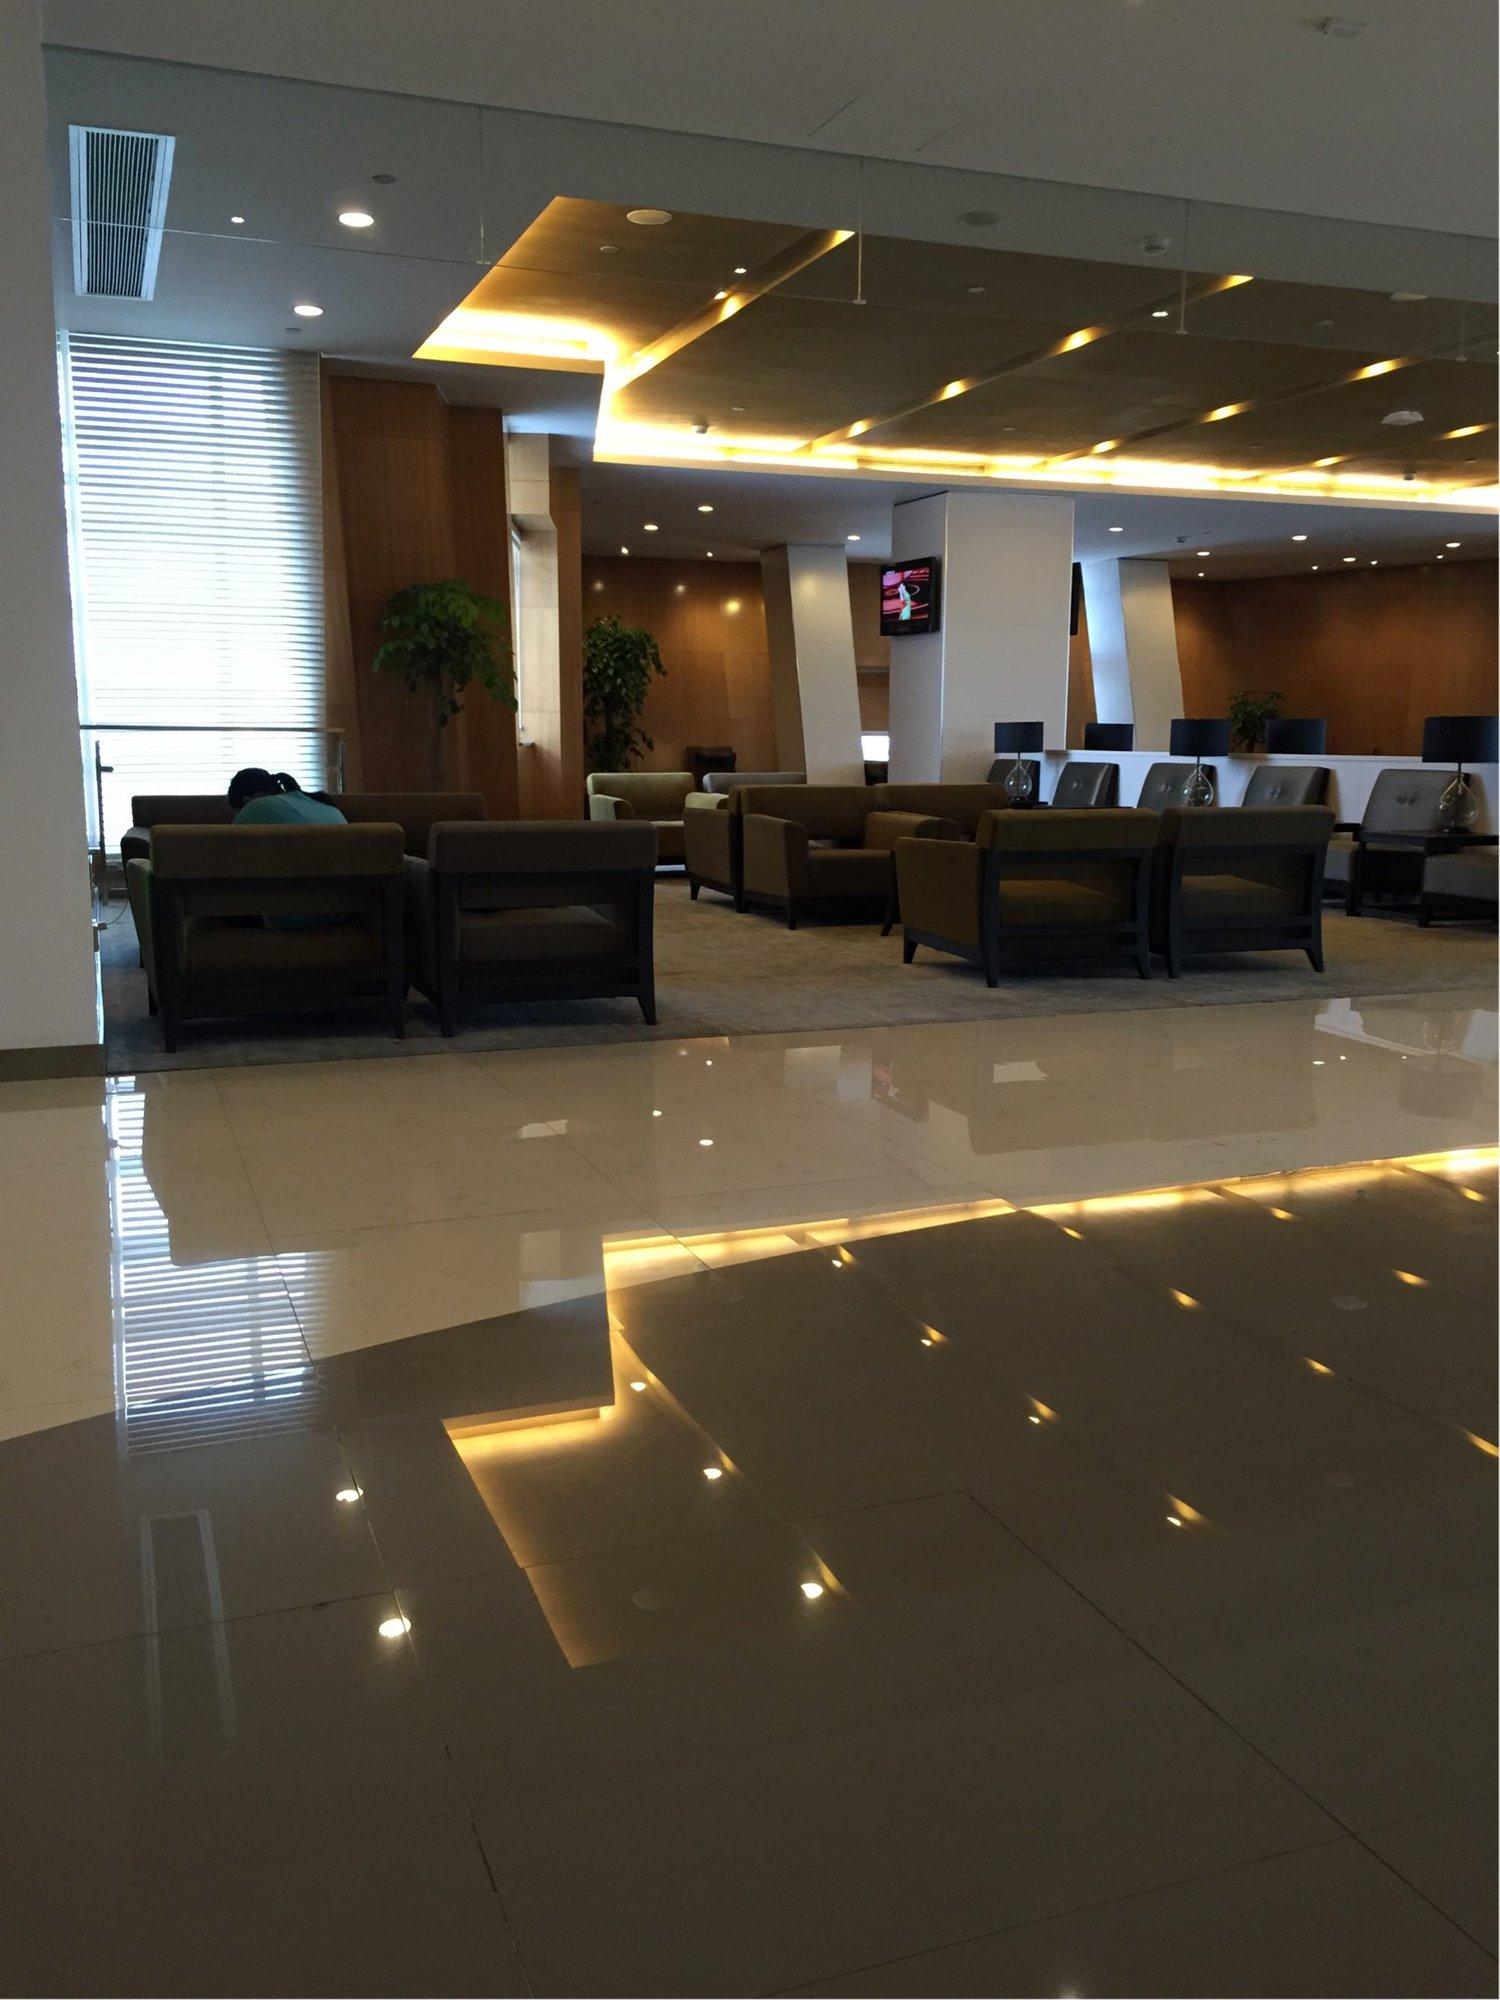 XiamenAir International First Class Lounge image 1 of 2